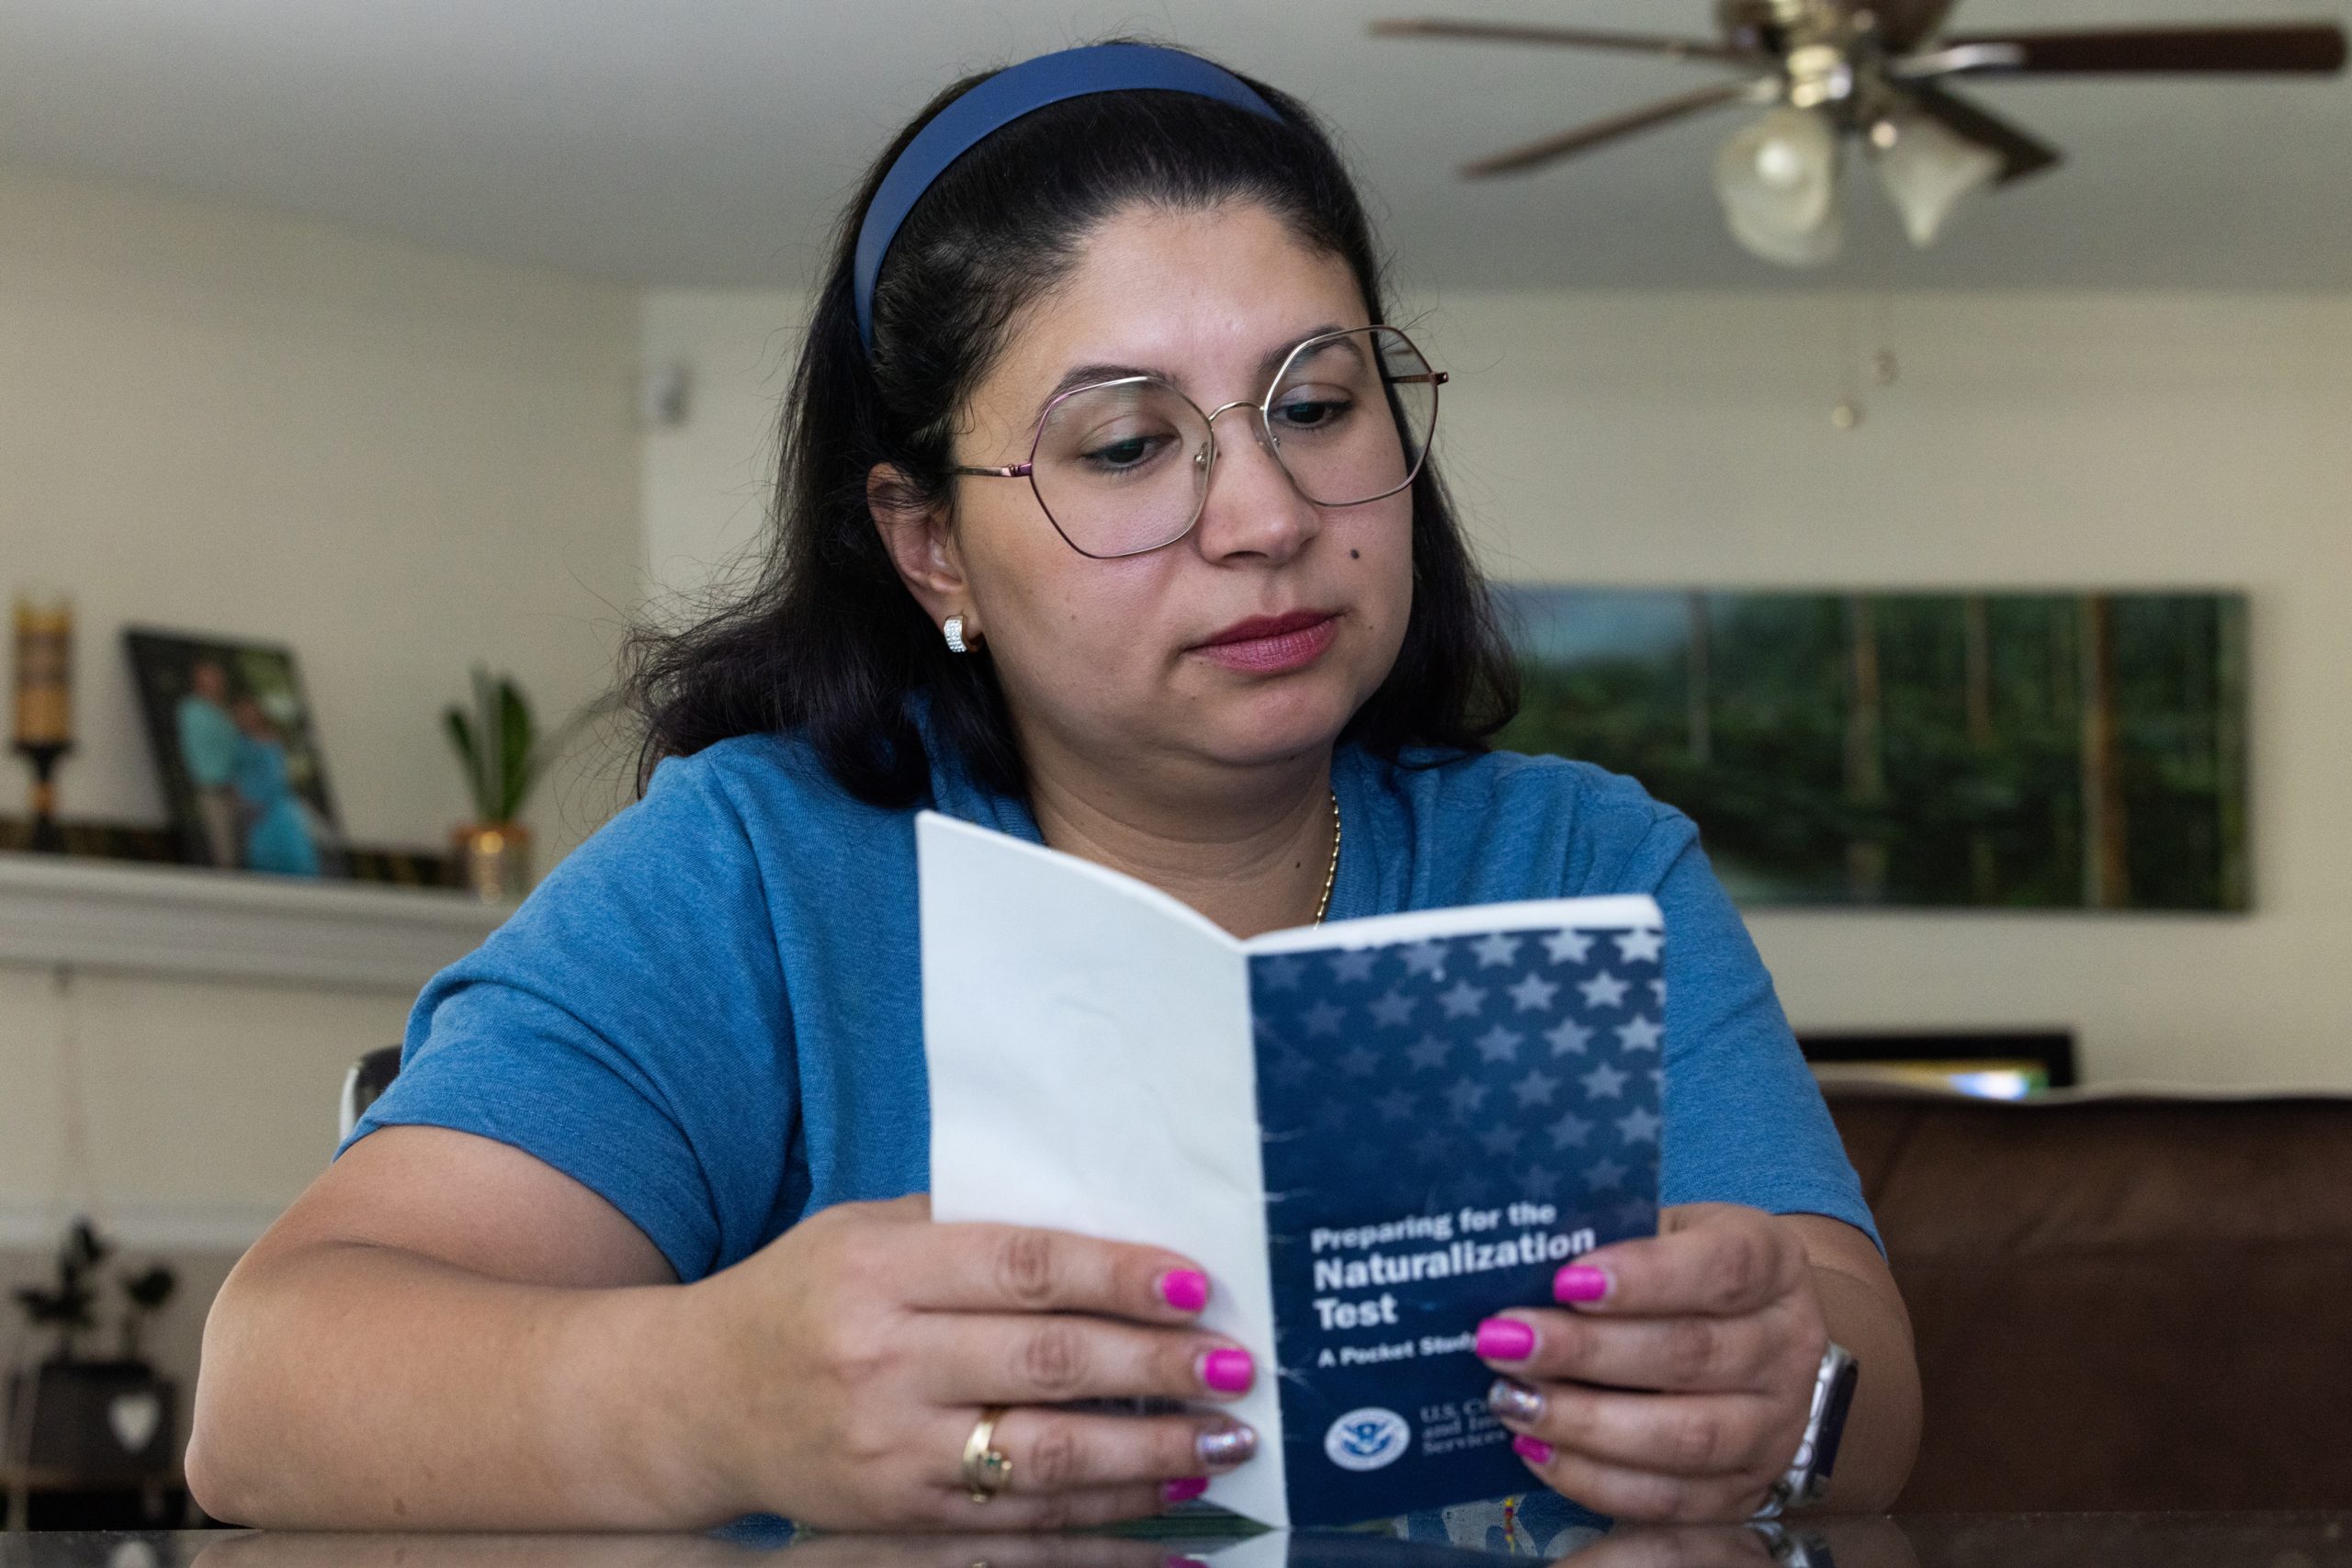 Jessica Mejia Ramirez studies for the U.S. naturalization test